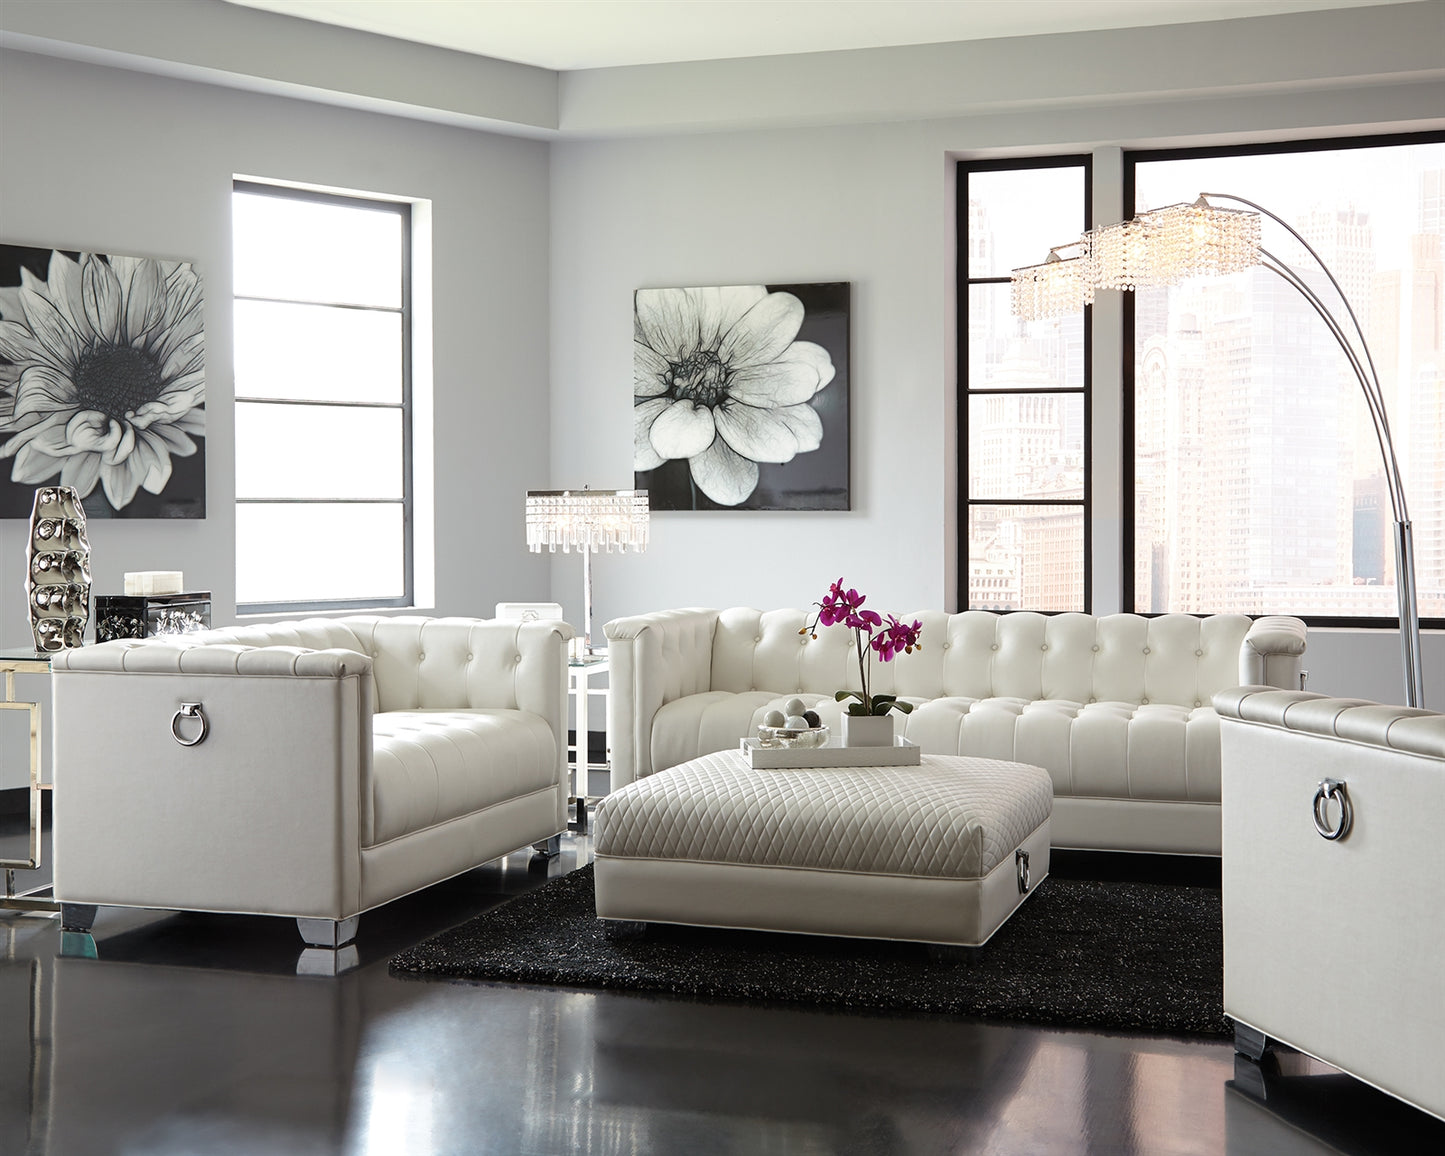 City Modern White Tufted Leatherette Sofa w- Chrome Feet